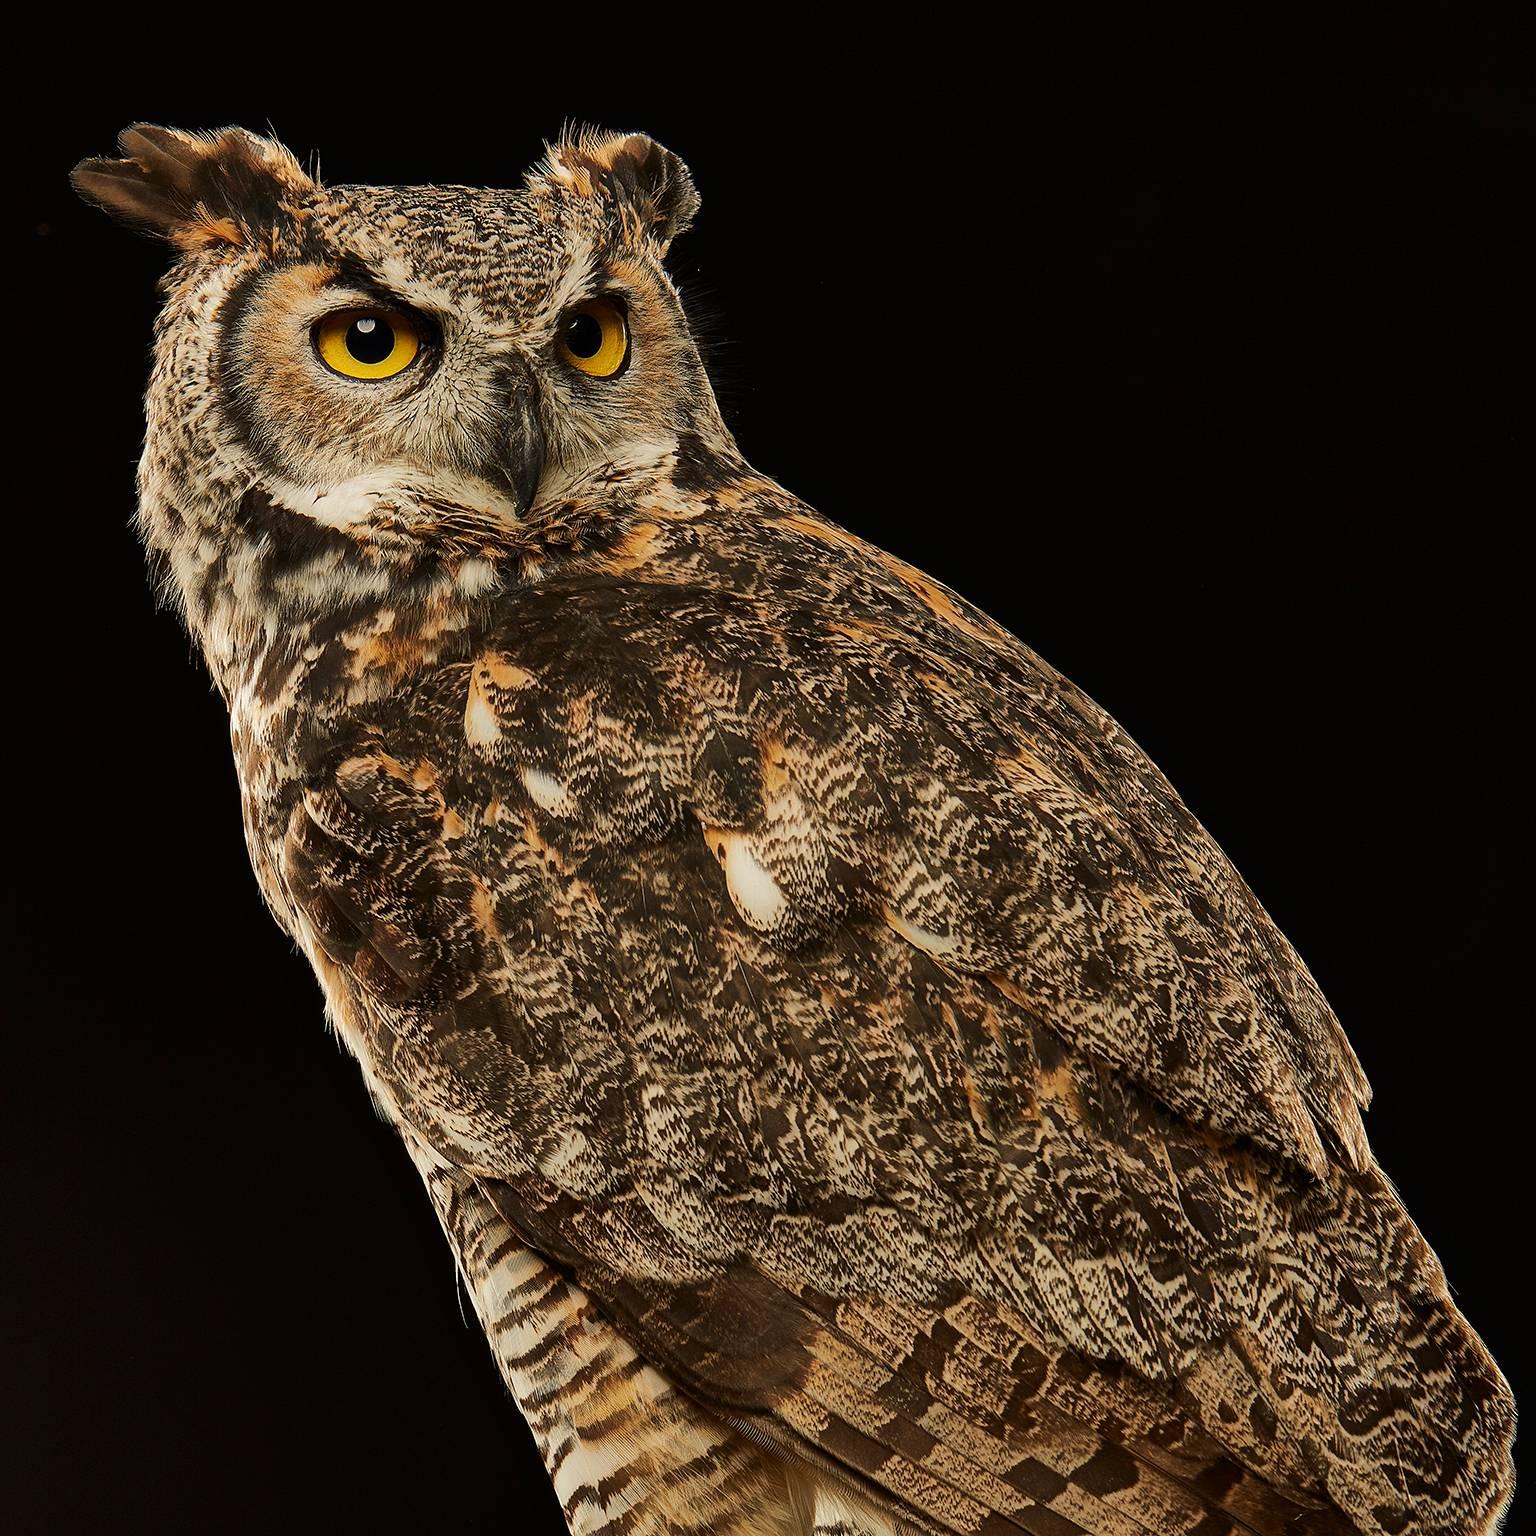 Birds of Prey - Great Horned Owl No. 15 - Photograph by Chris Gordaneer